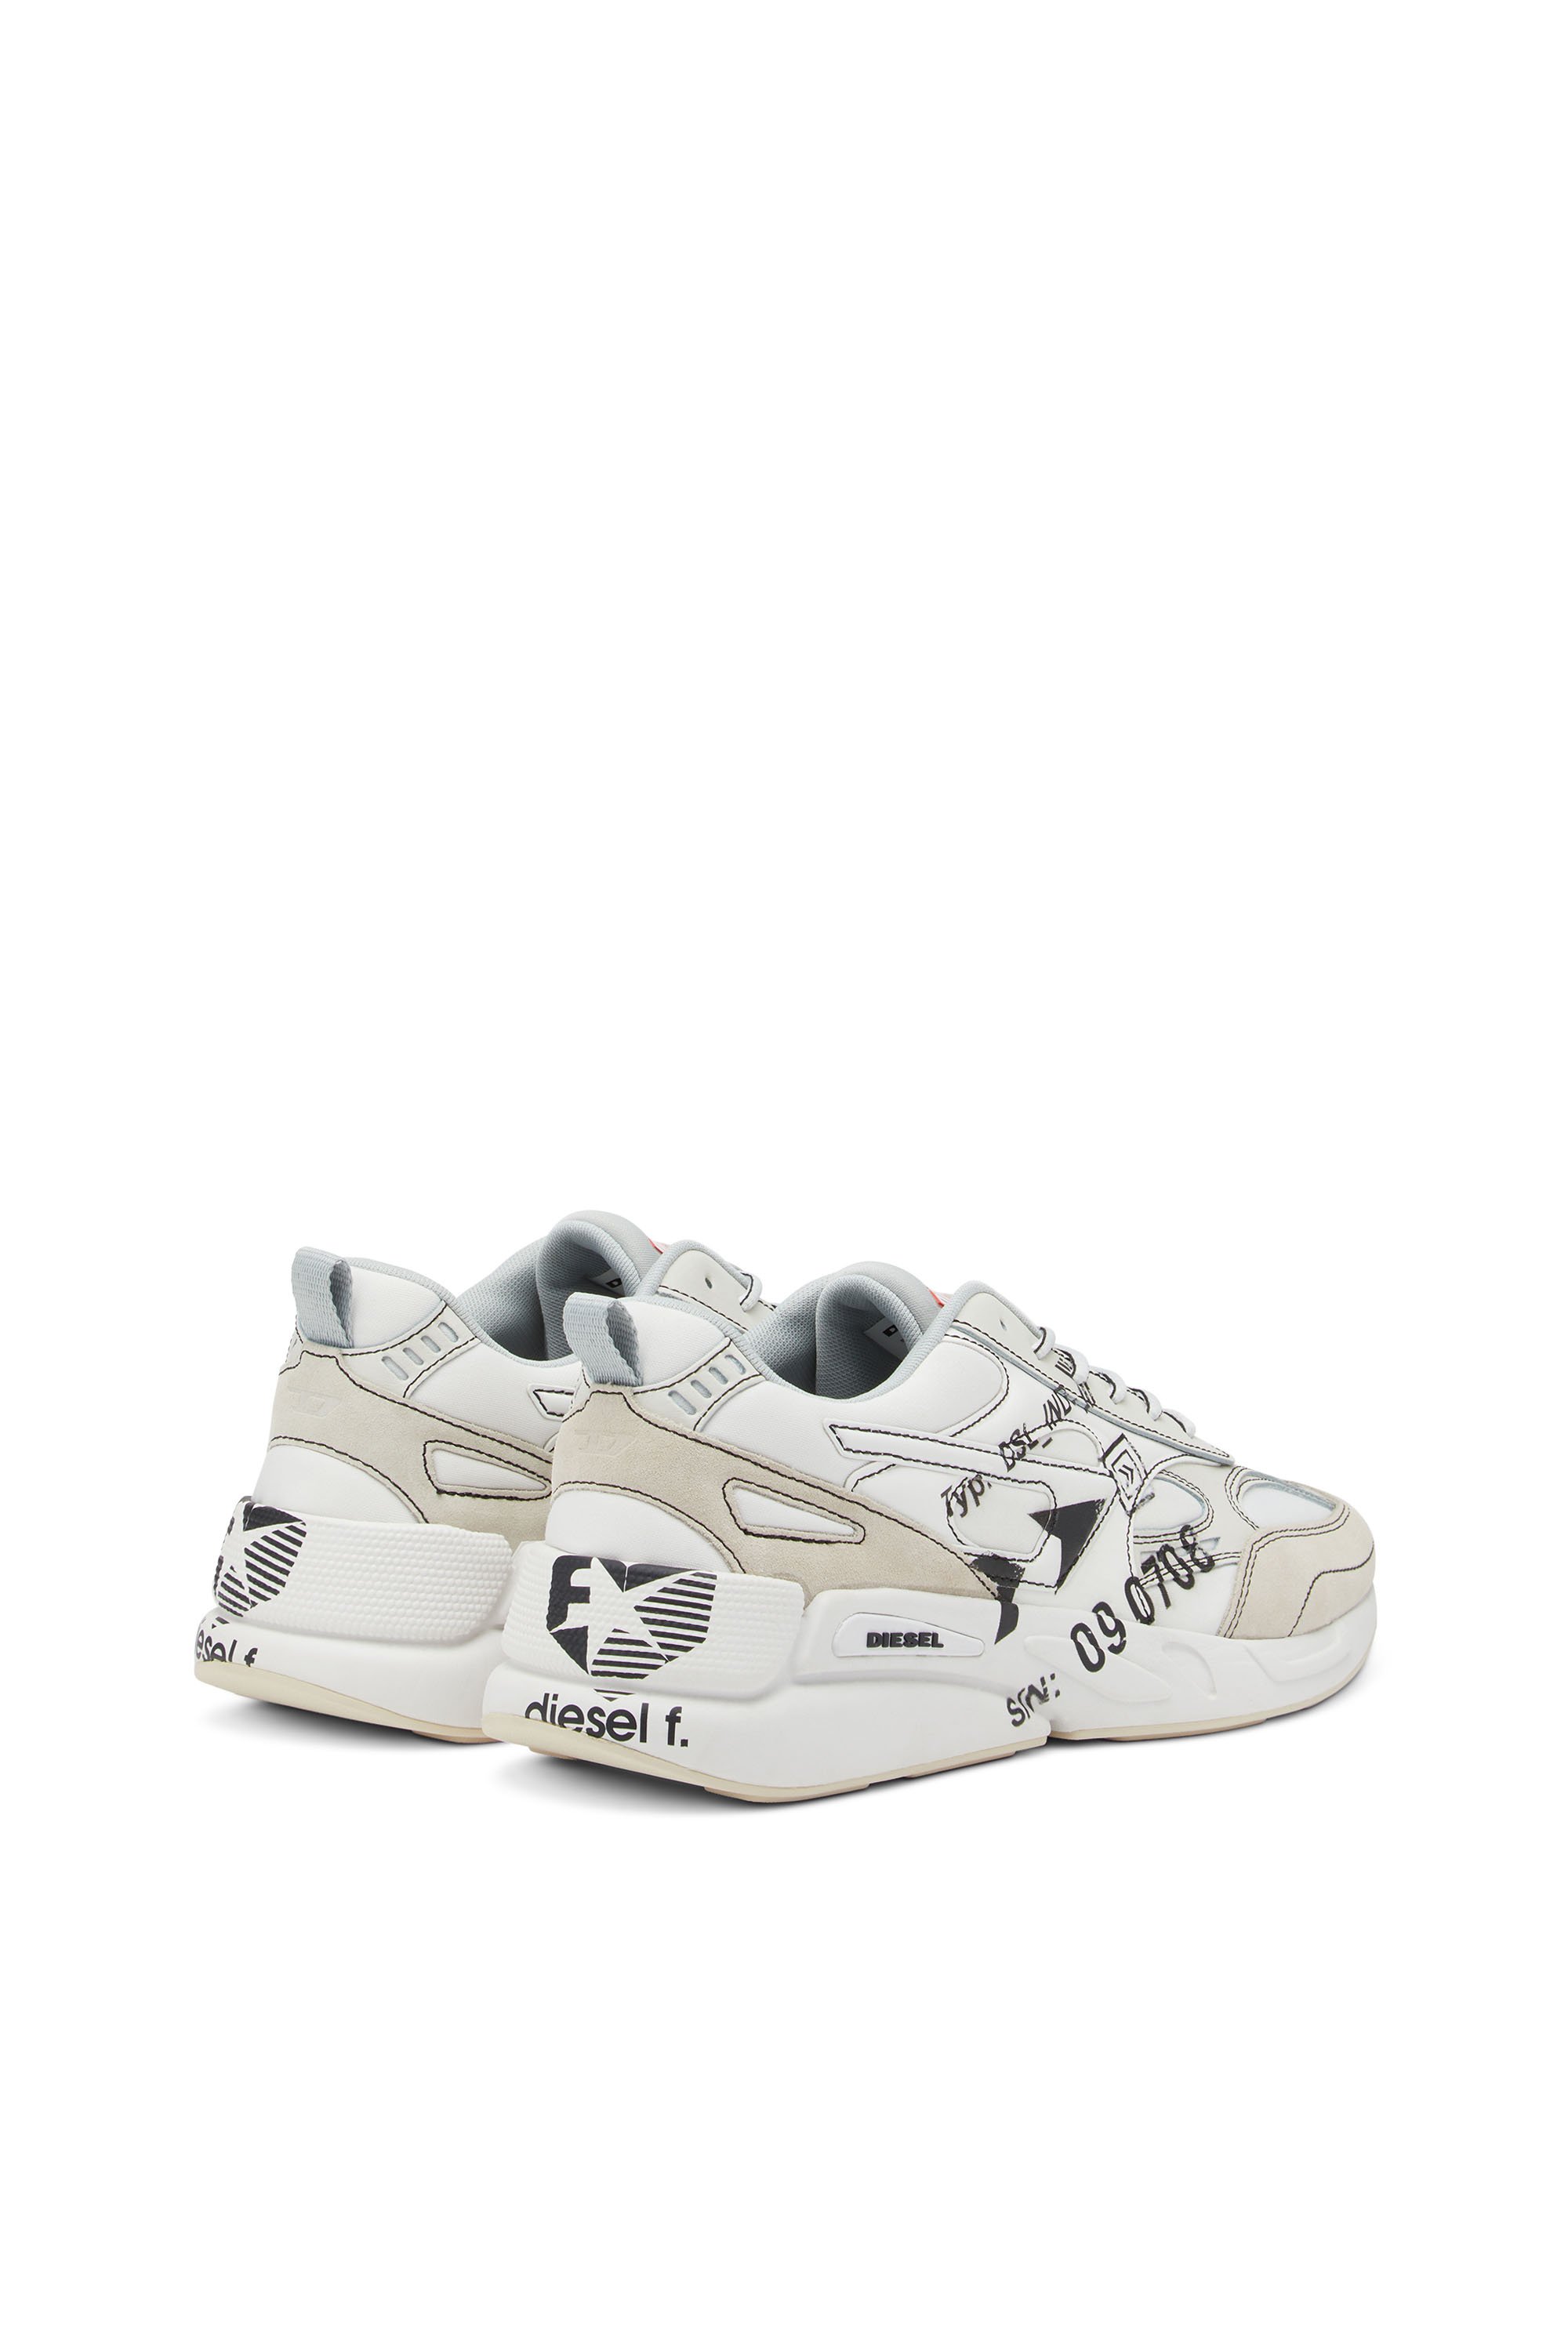 Diesel Toddler/Little Kid Magnete Exposure Sneaker - ShopStyle Girls' Shoes